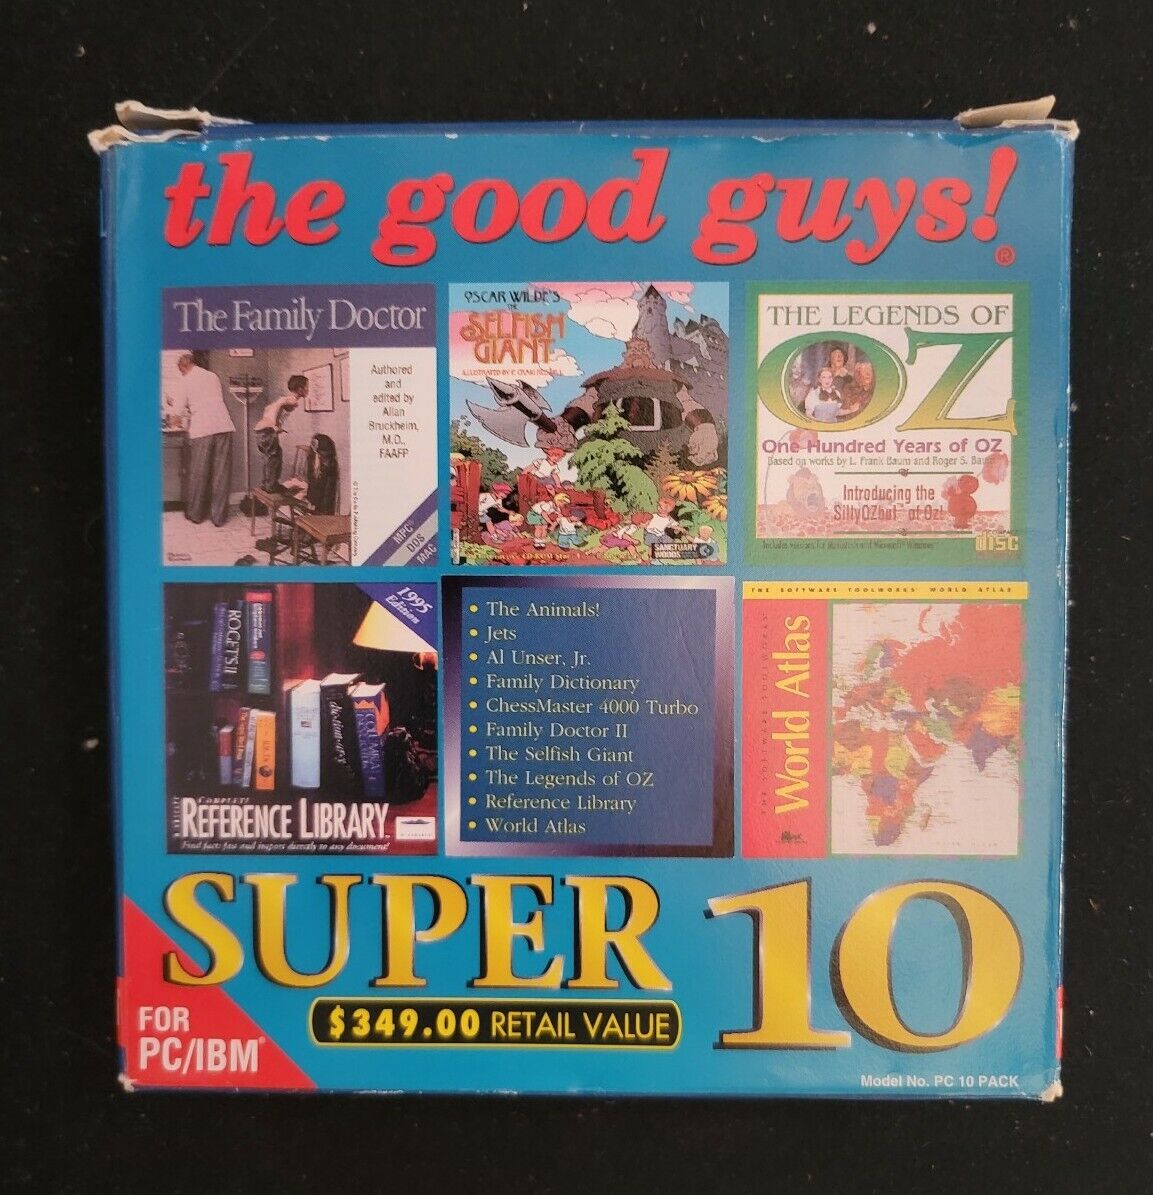 THE GOOD GUYS 10 PACK PC/IBM CD-ROMS ChessMaster 4000 Turbo - Jets - The Animals